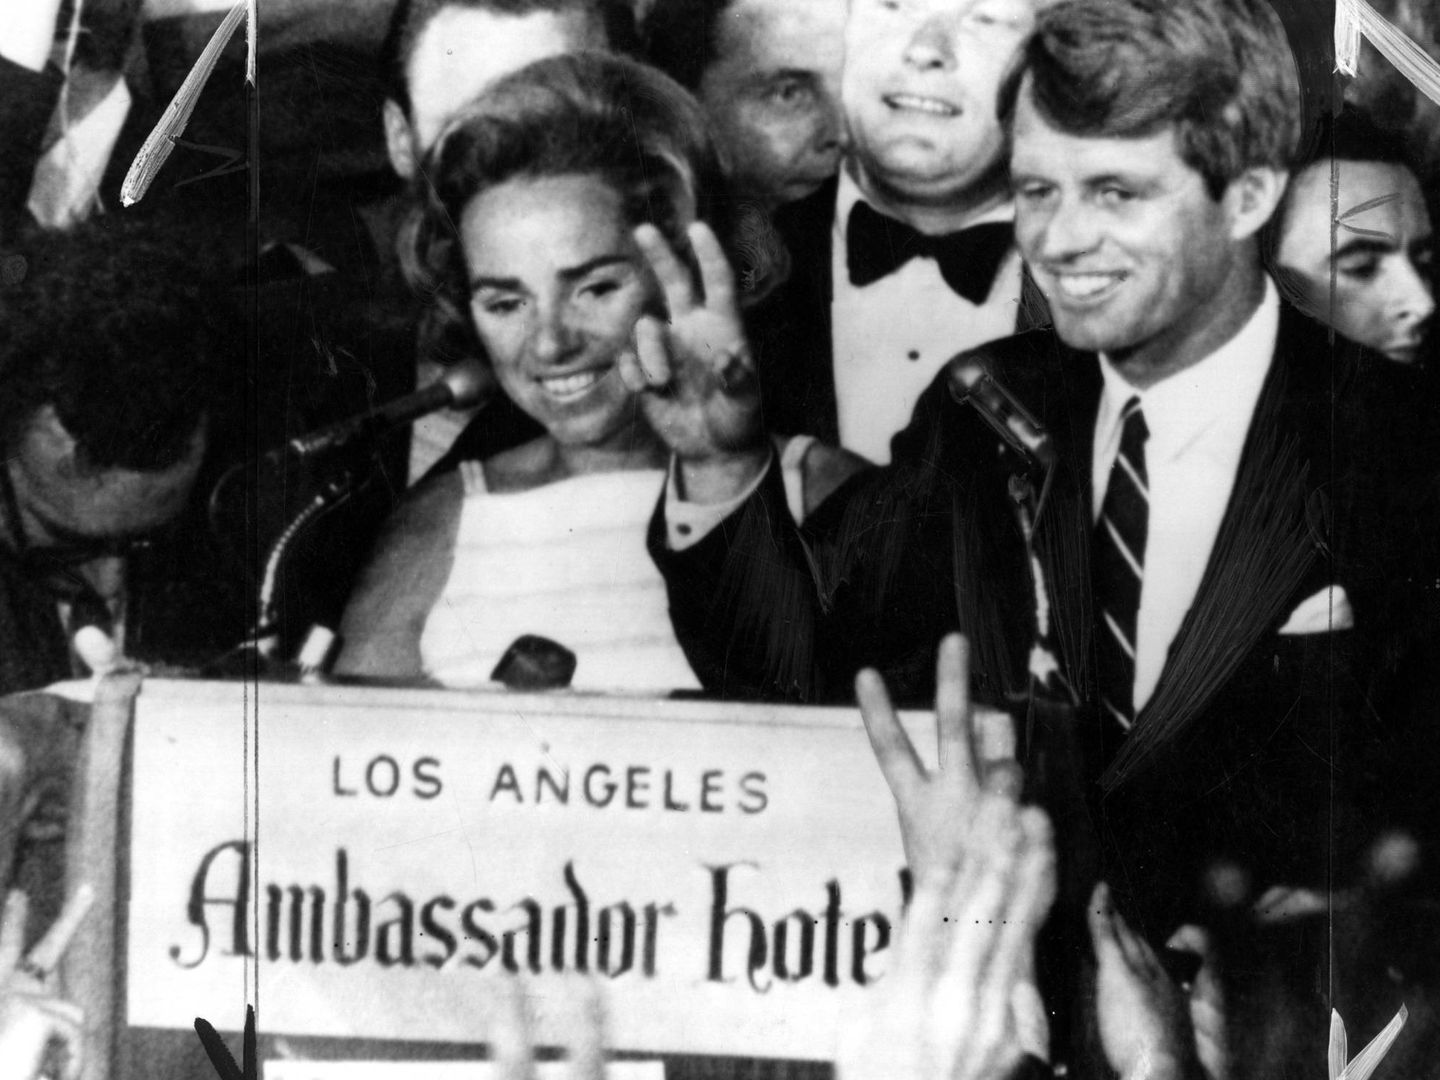 Robert Kennedy, momentos antes de ser abatido en el hotel Ambassador. (Cordon Press)